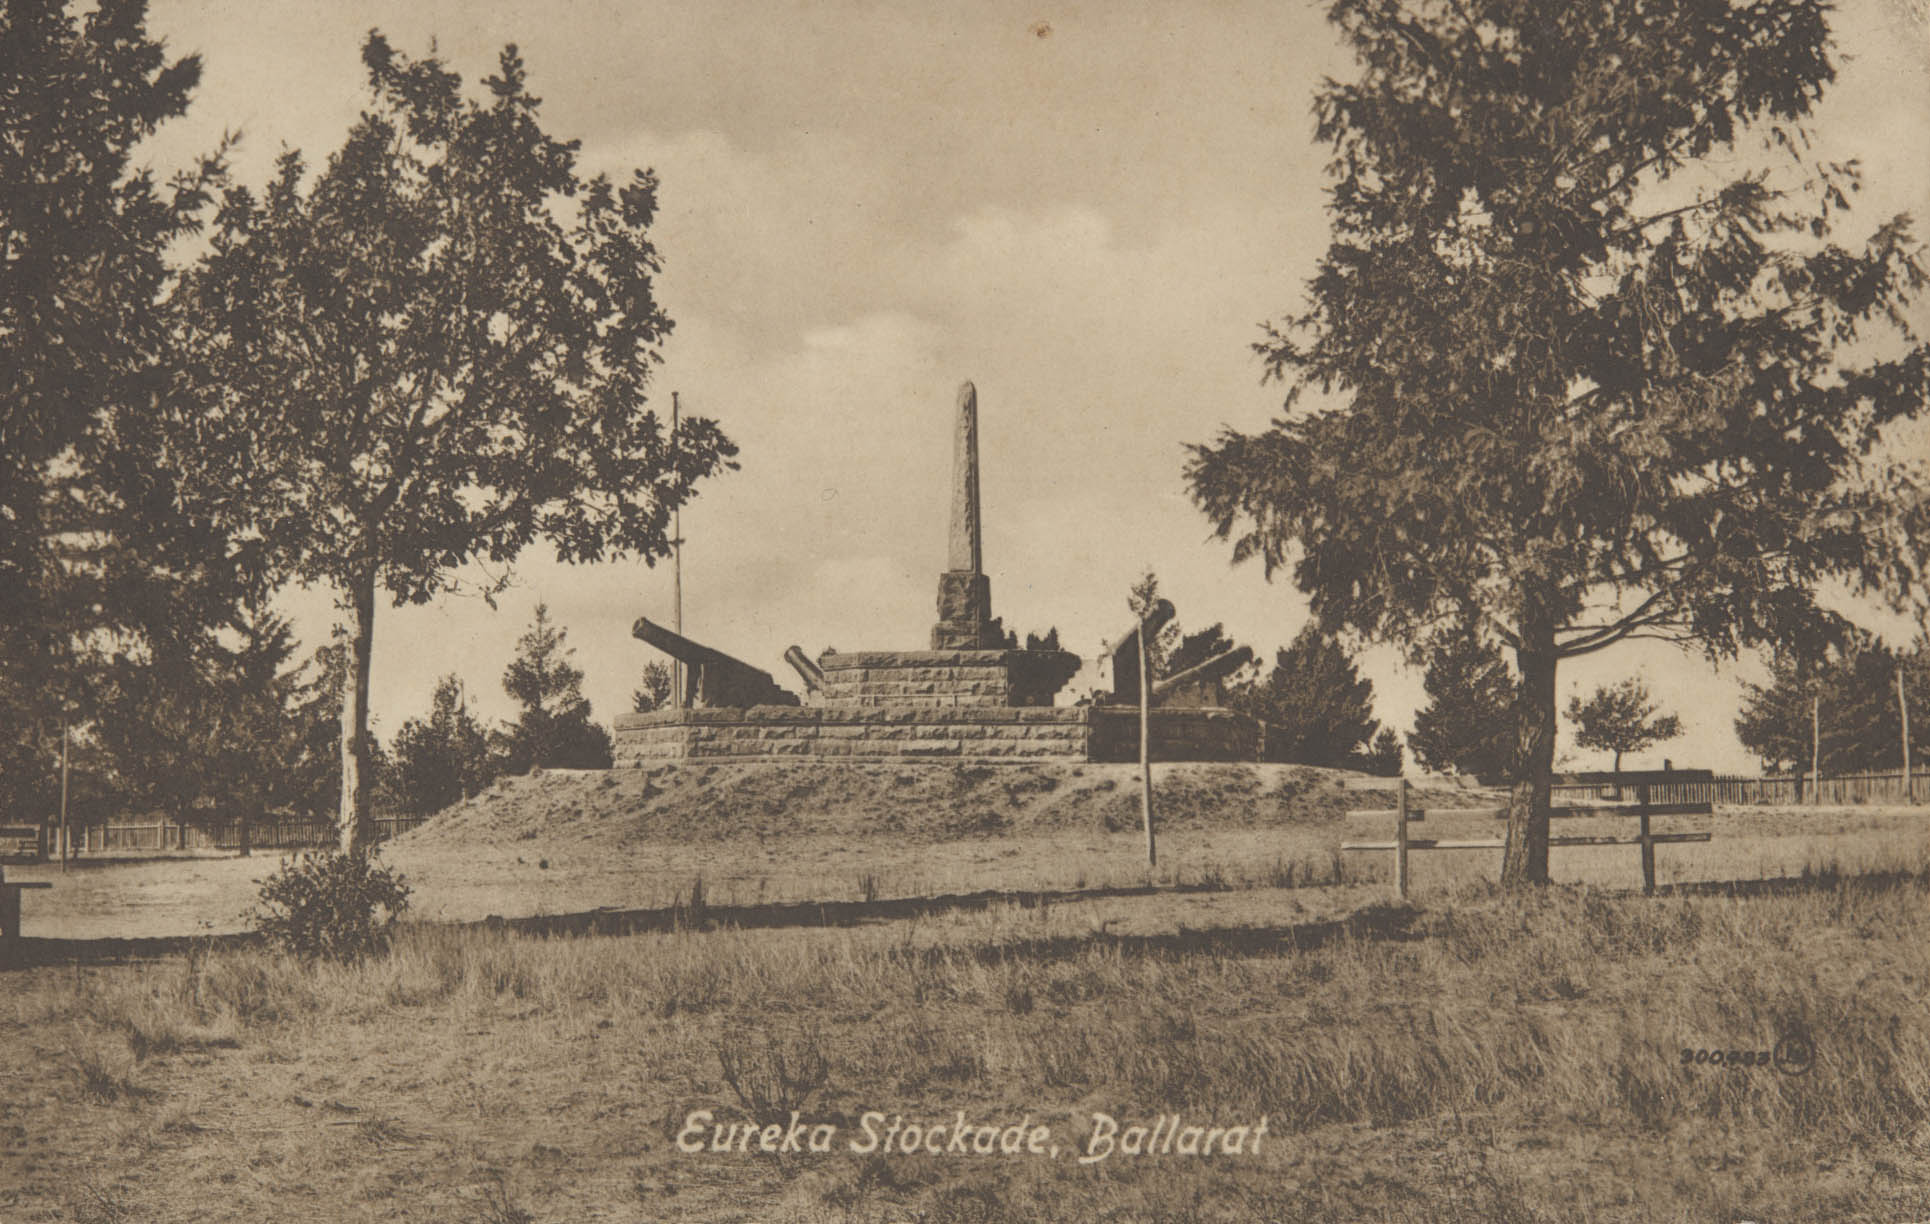 Postcard showing the Eureka Stockade, Ballarat.